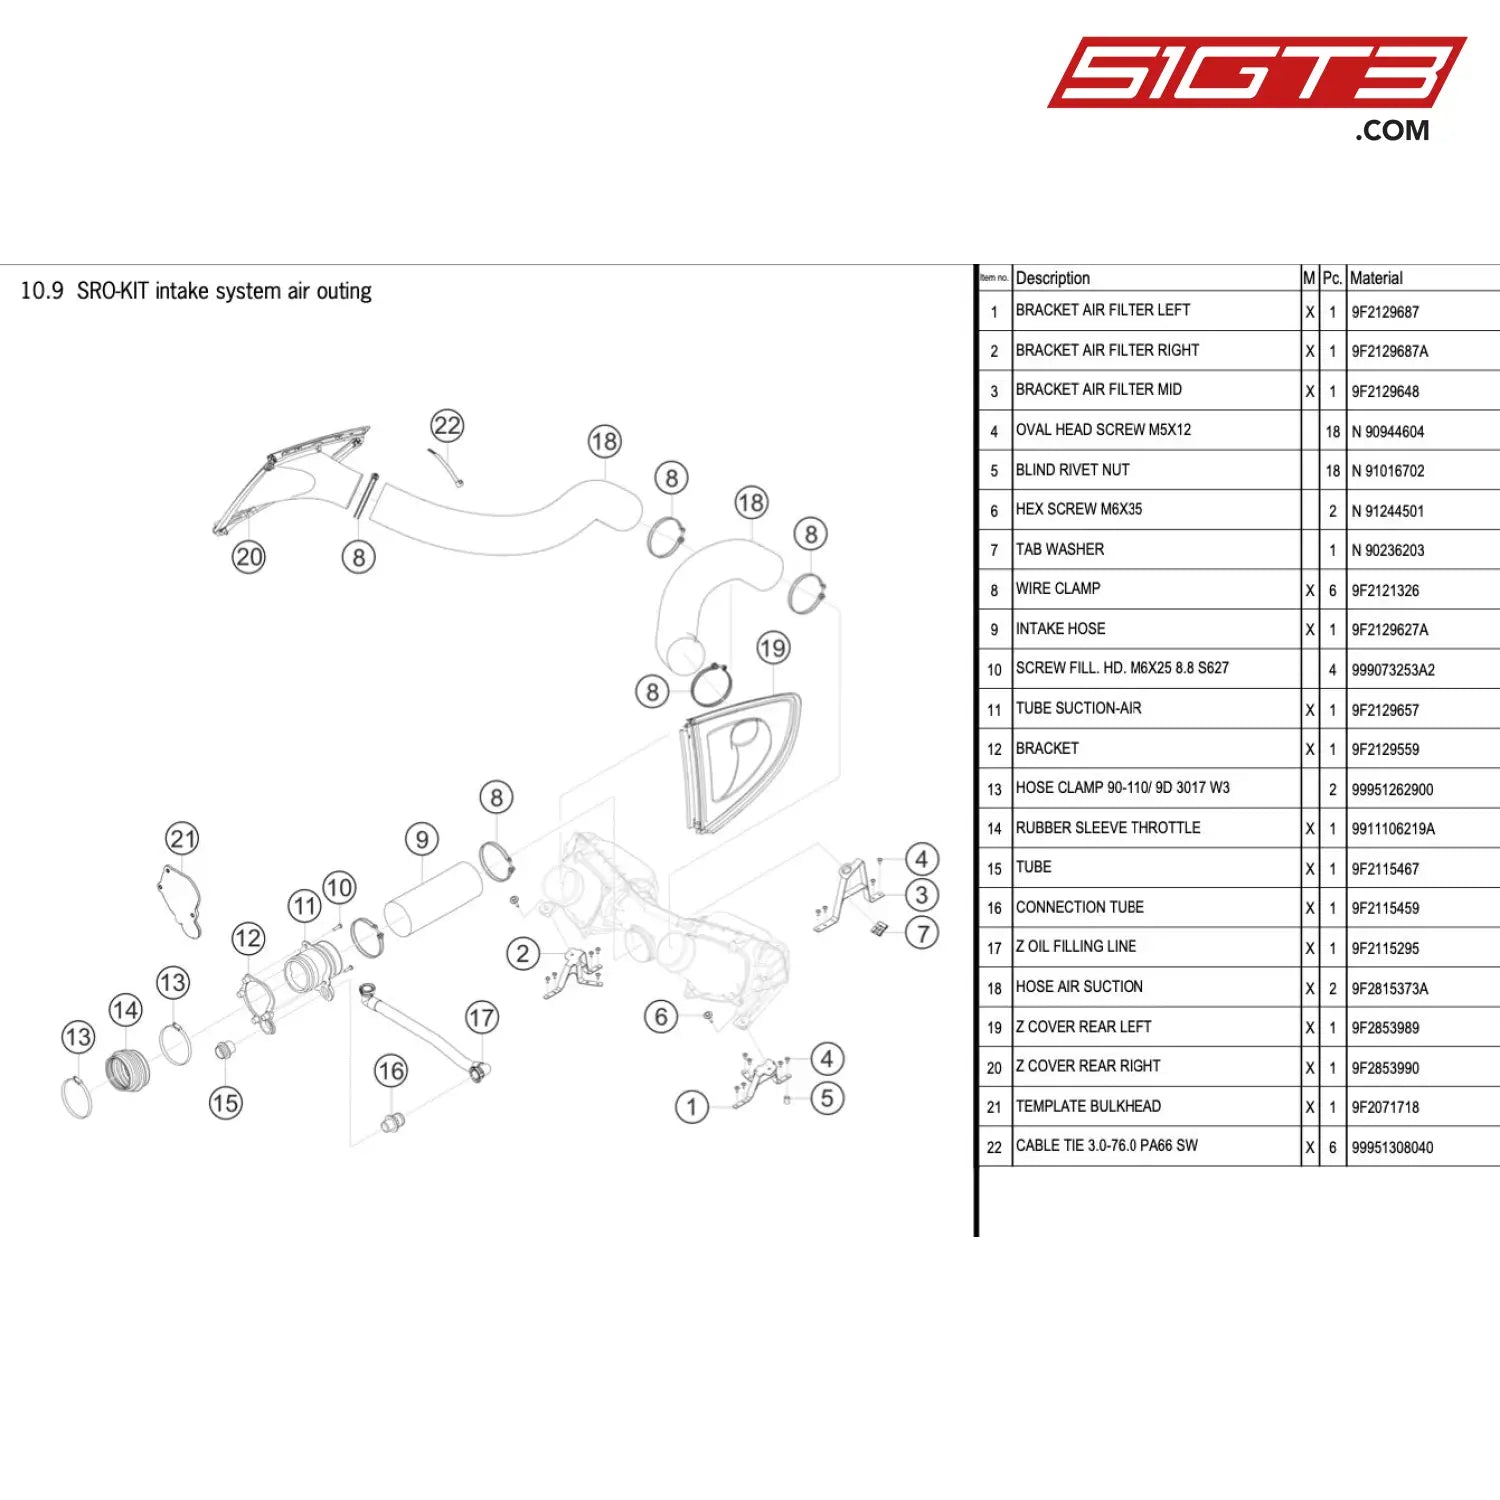 Template Bulkhead - 9F2071718 [Porsche 718 Cayman Gt4 Clubsport] Sro-Kit Intake System Air Outing